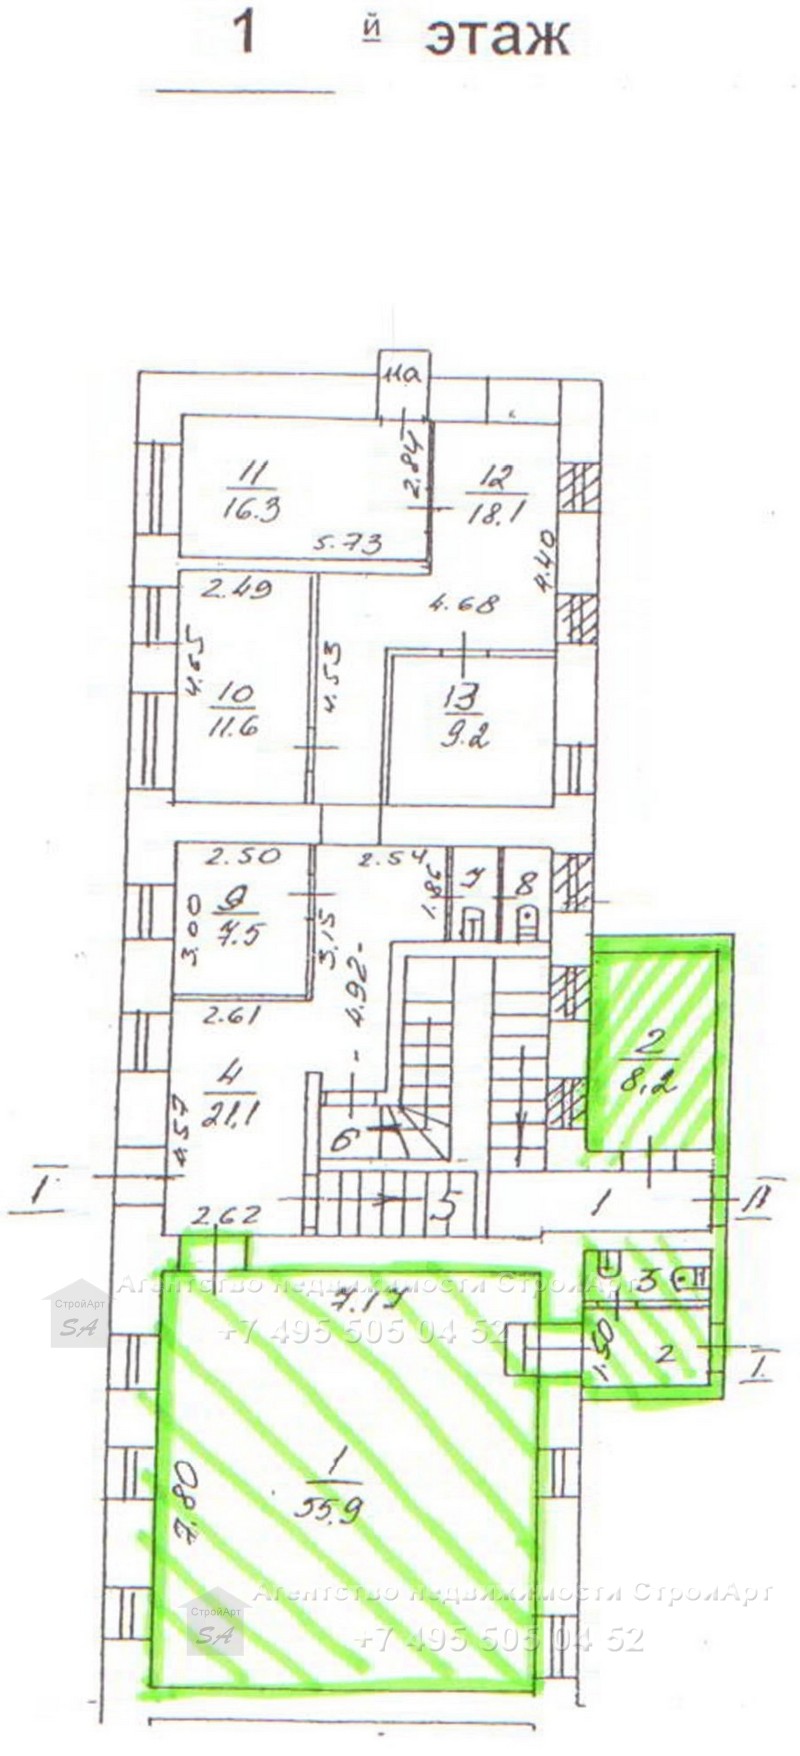 7881 Аренда помещения под банк ул. Ленивка д.3 с. 3, 180 кв.м без комиссии